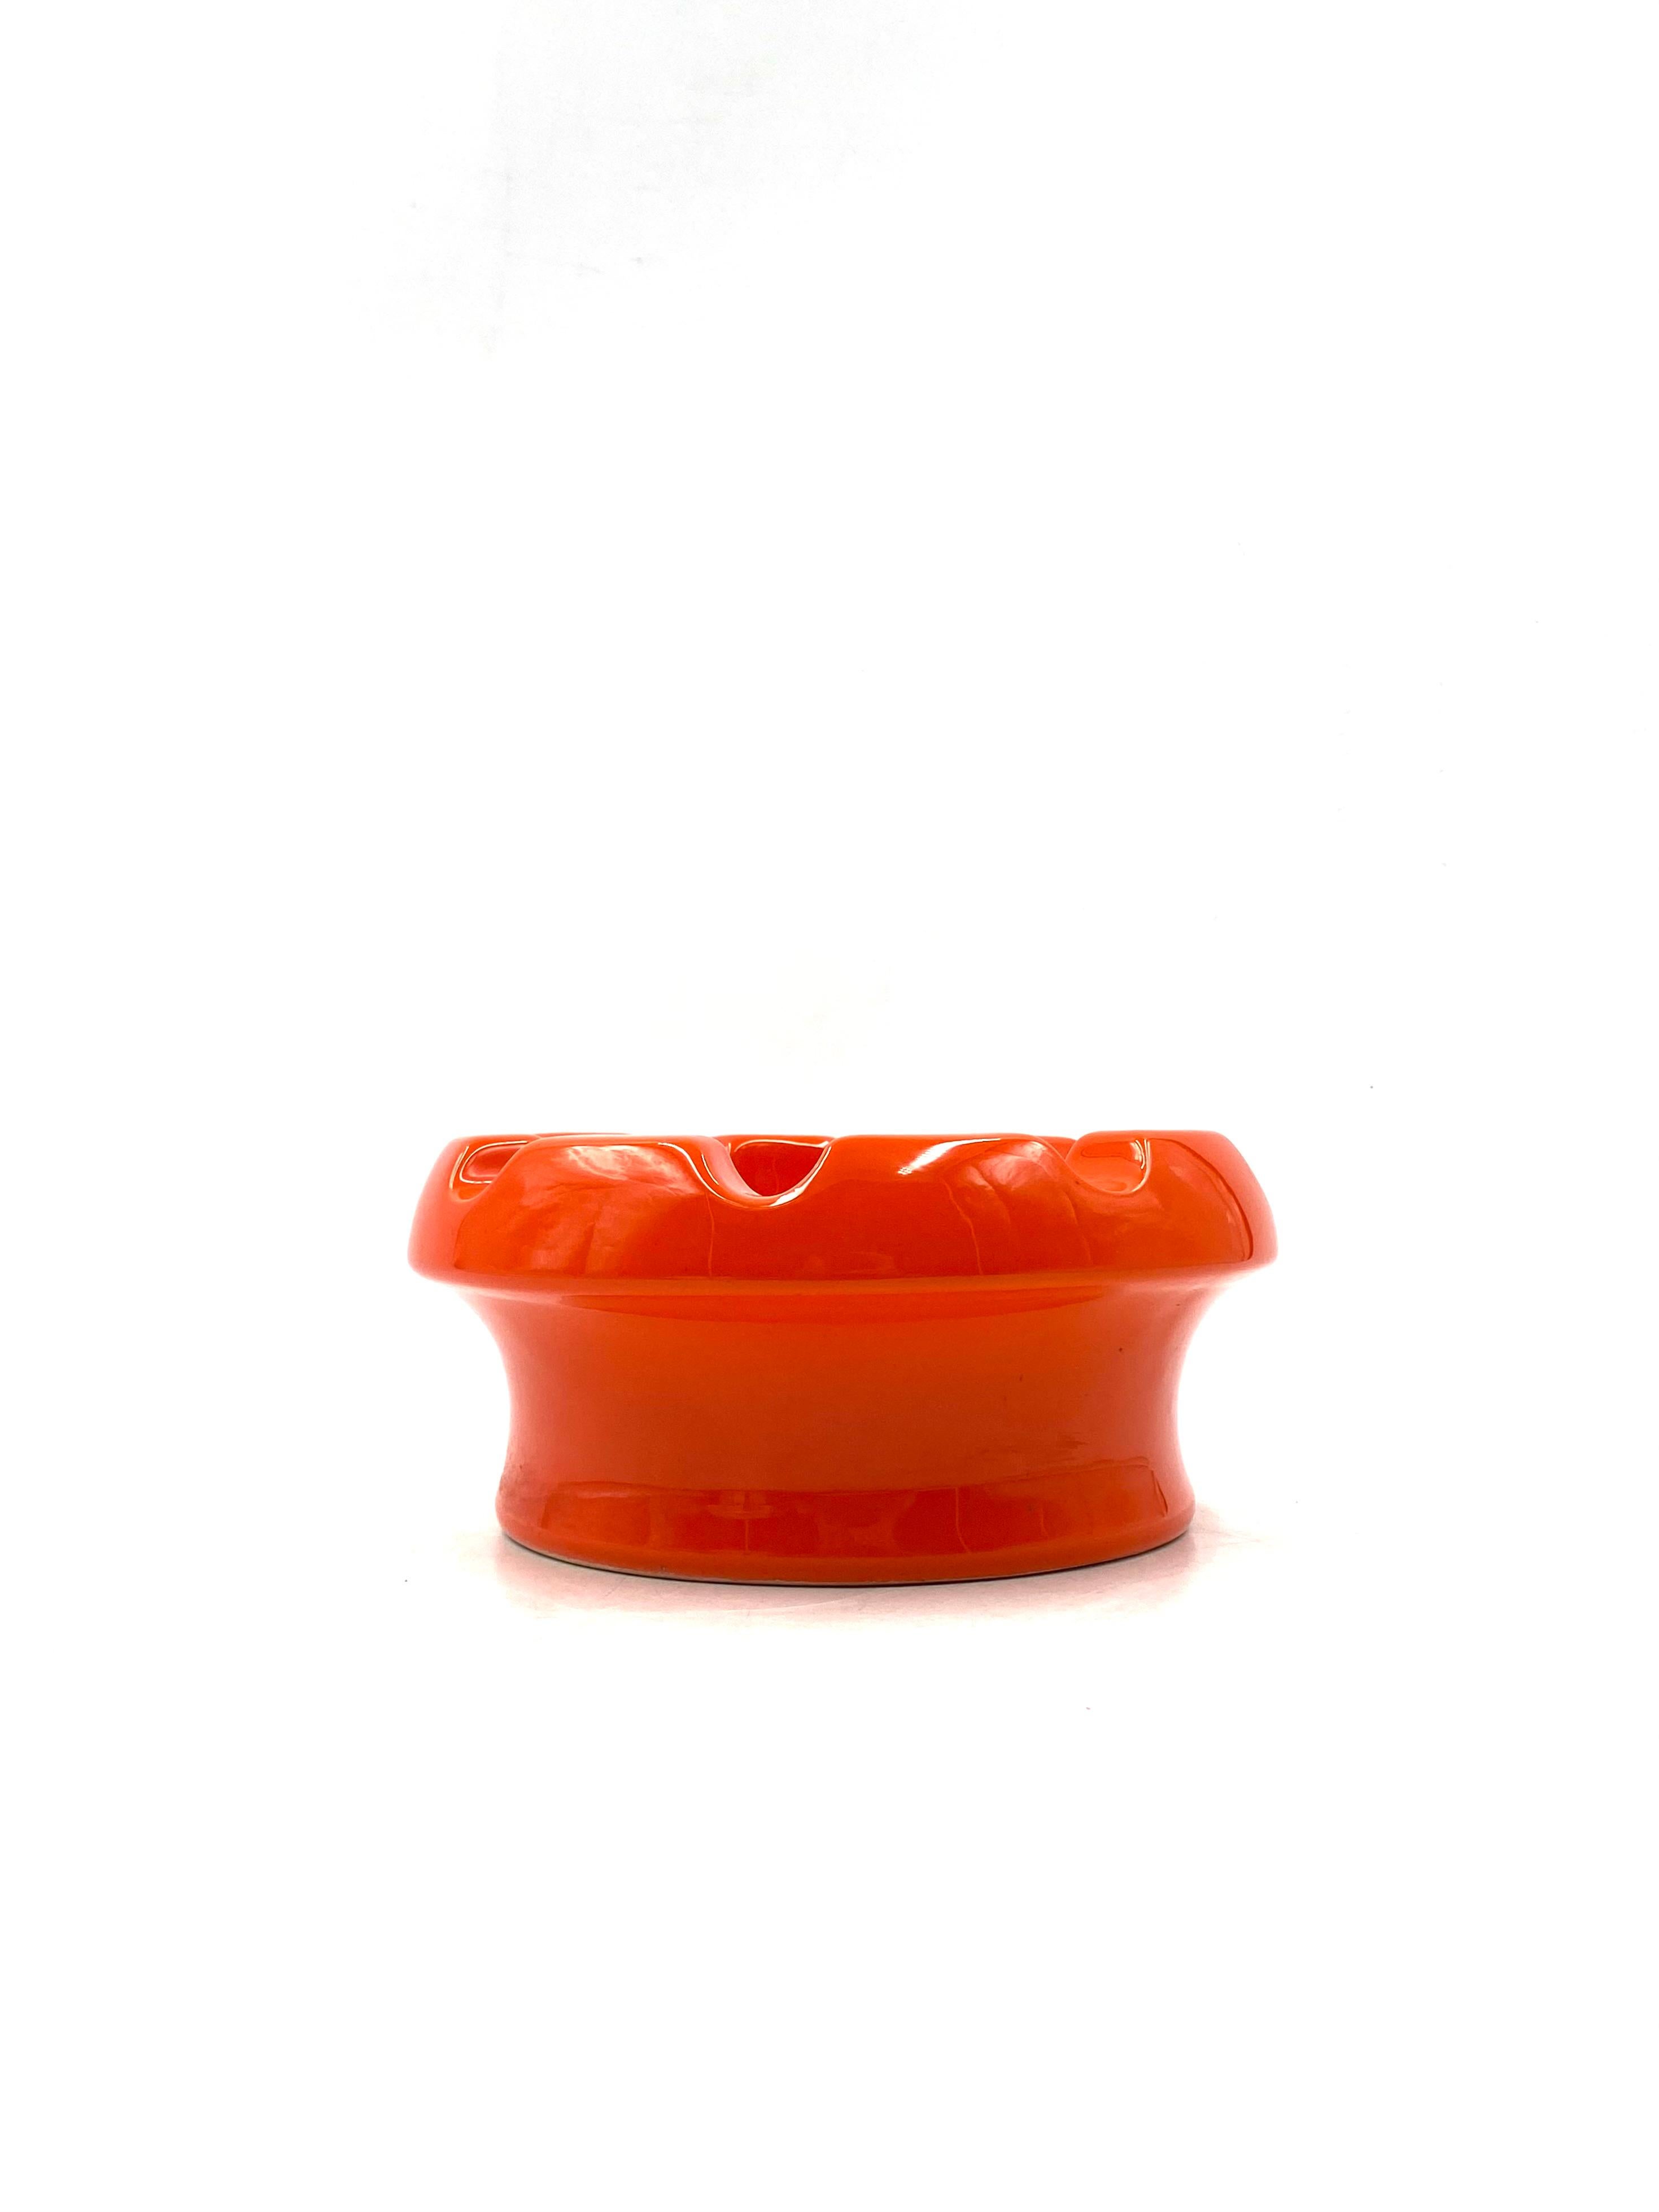 Pino Spagnolo, Large orange ceramic ashtray, Sicart, 1970s For Sale 2